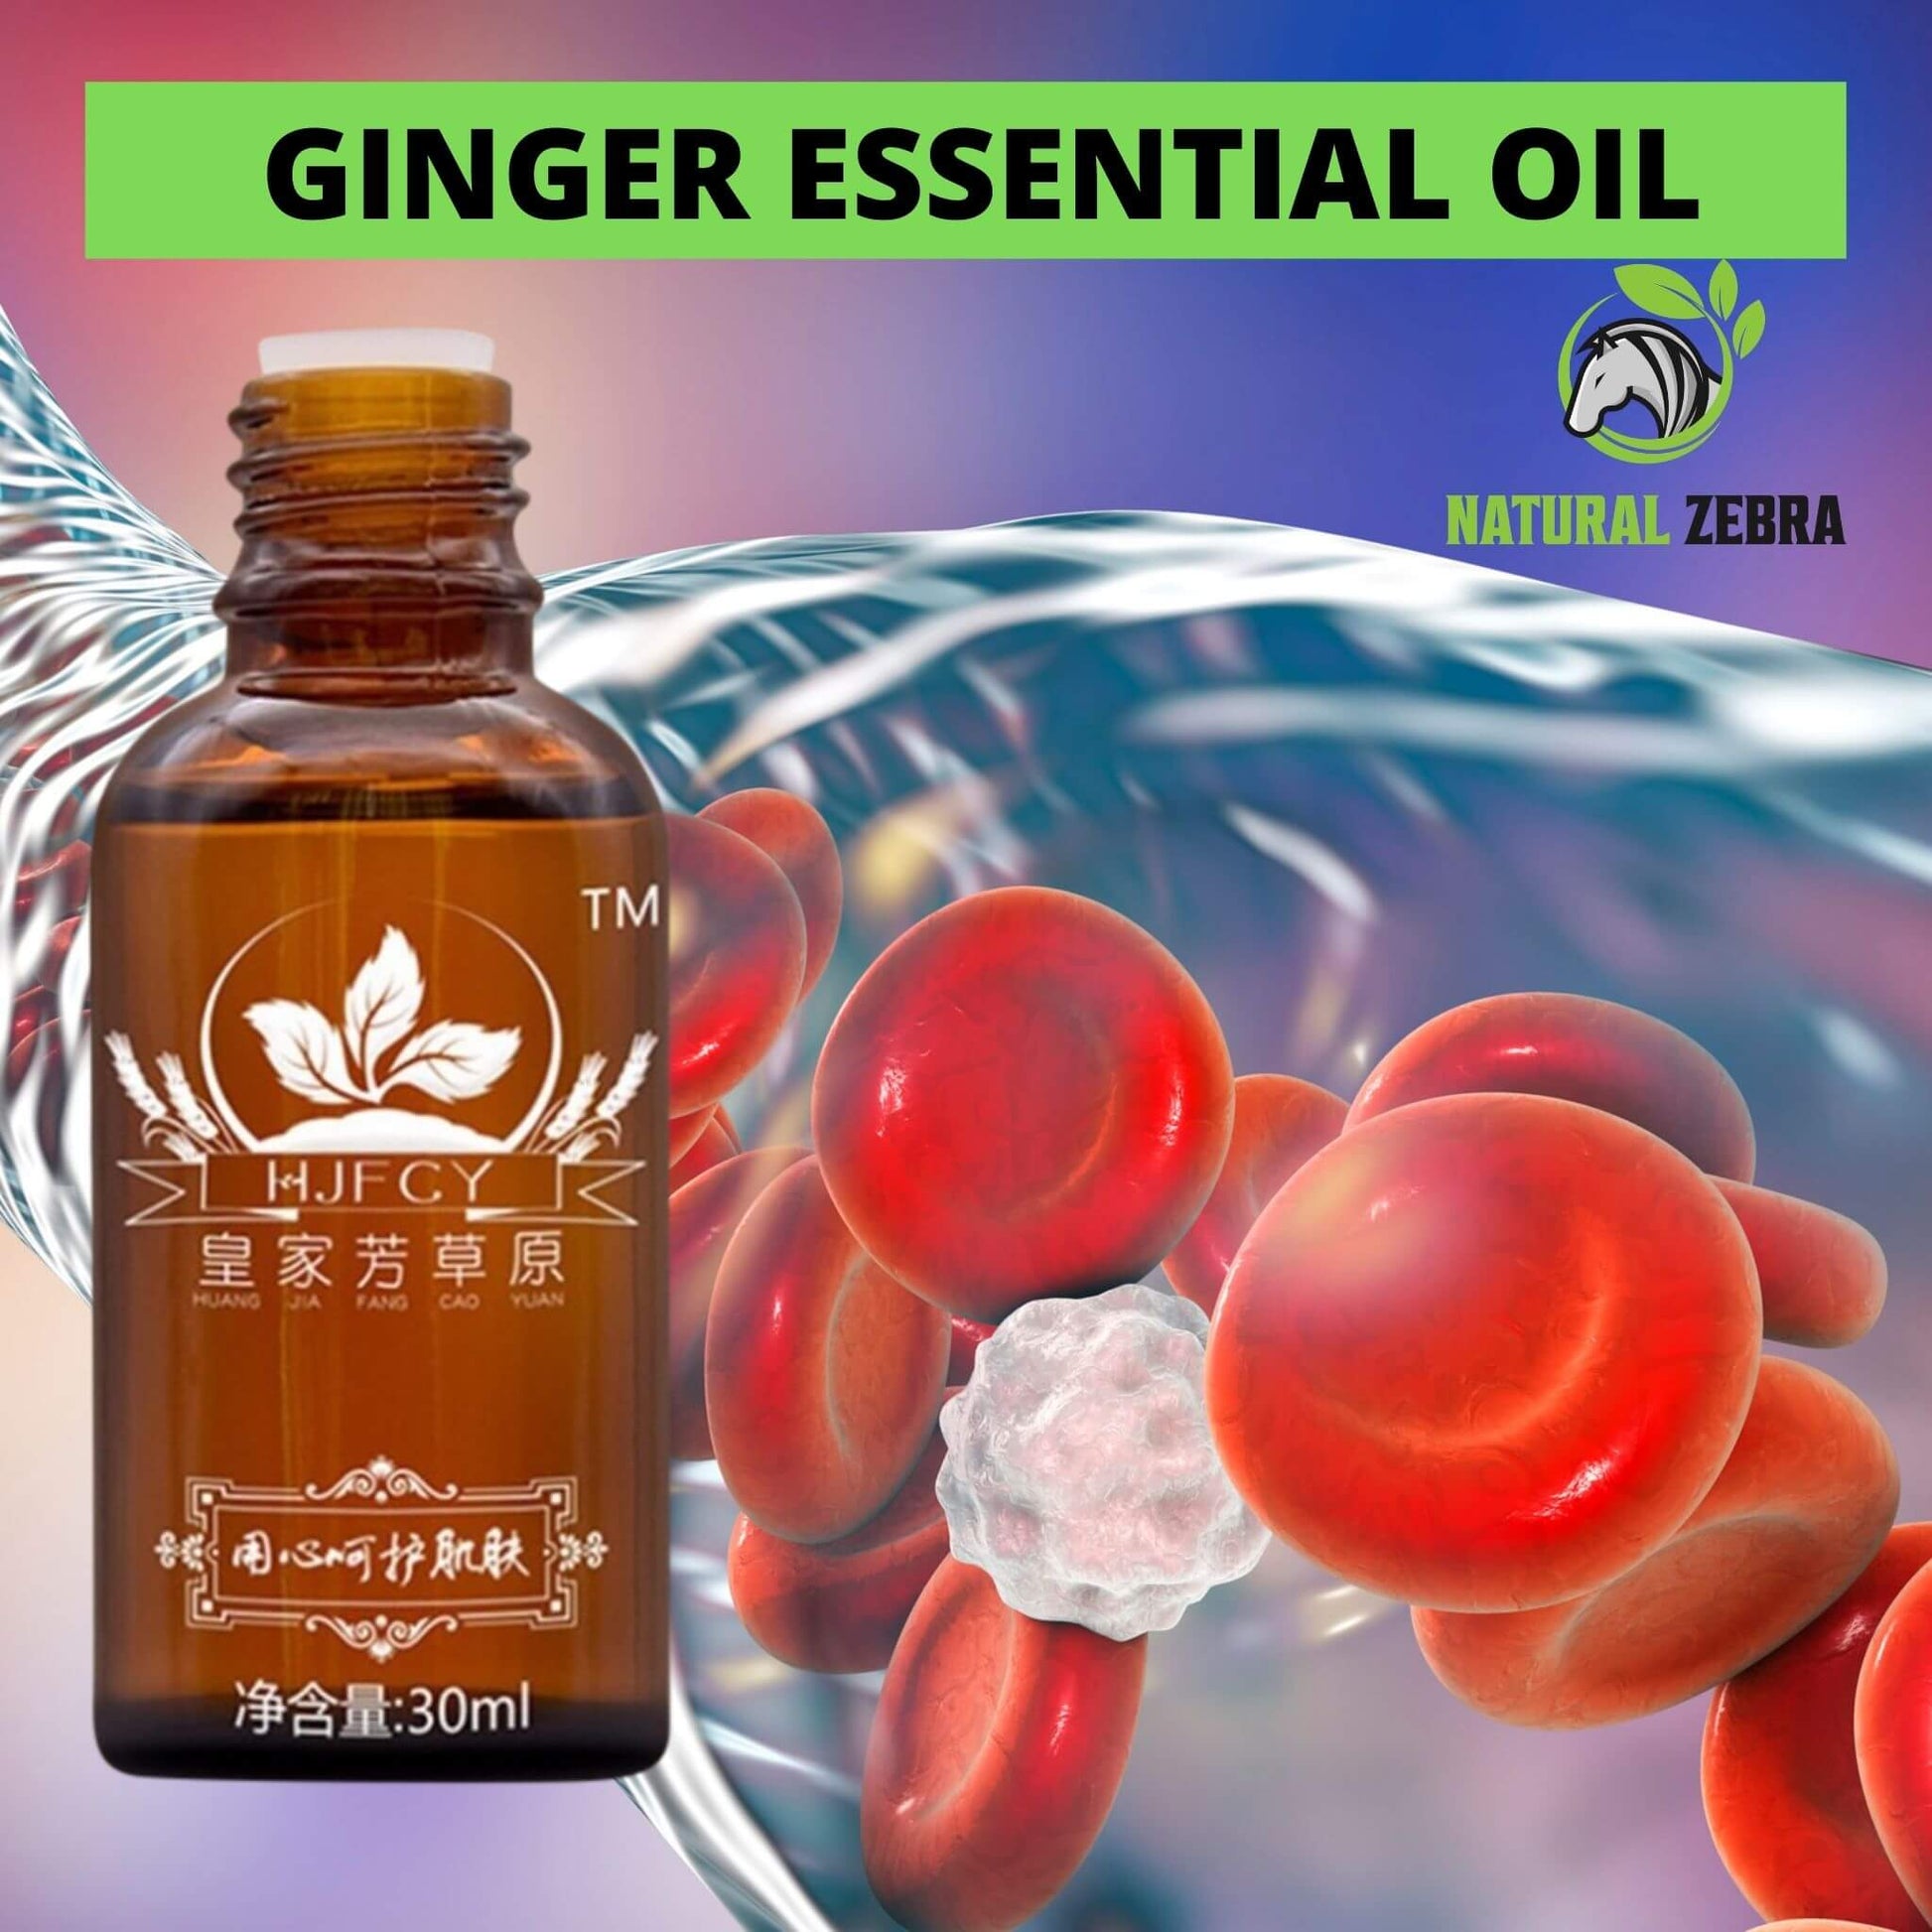 Ginger Essential Oil - 30ml - 36 - NATURAL ZEBRA